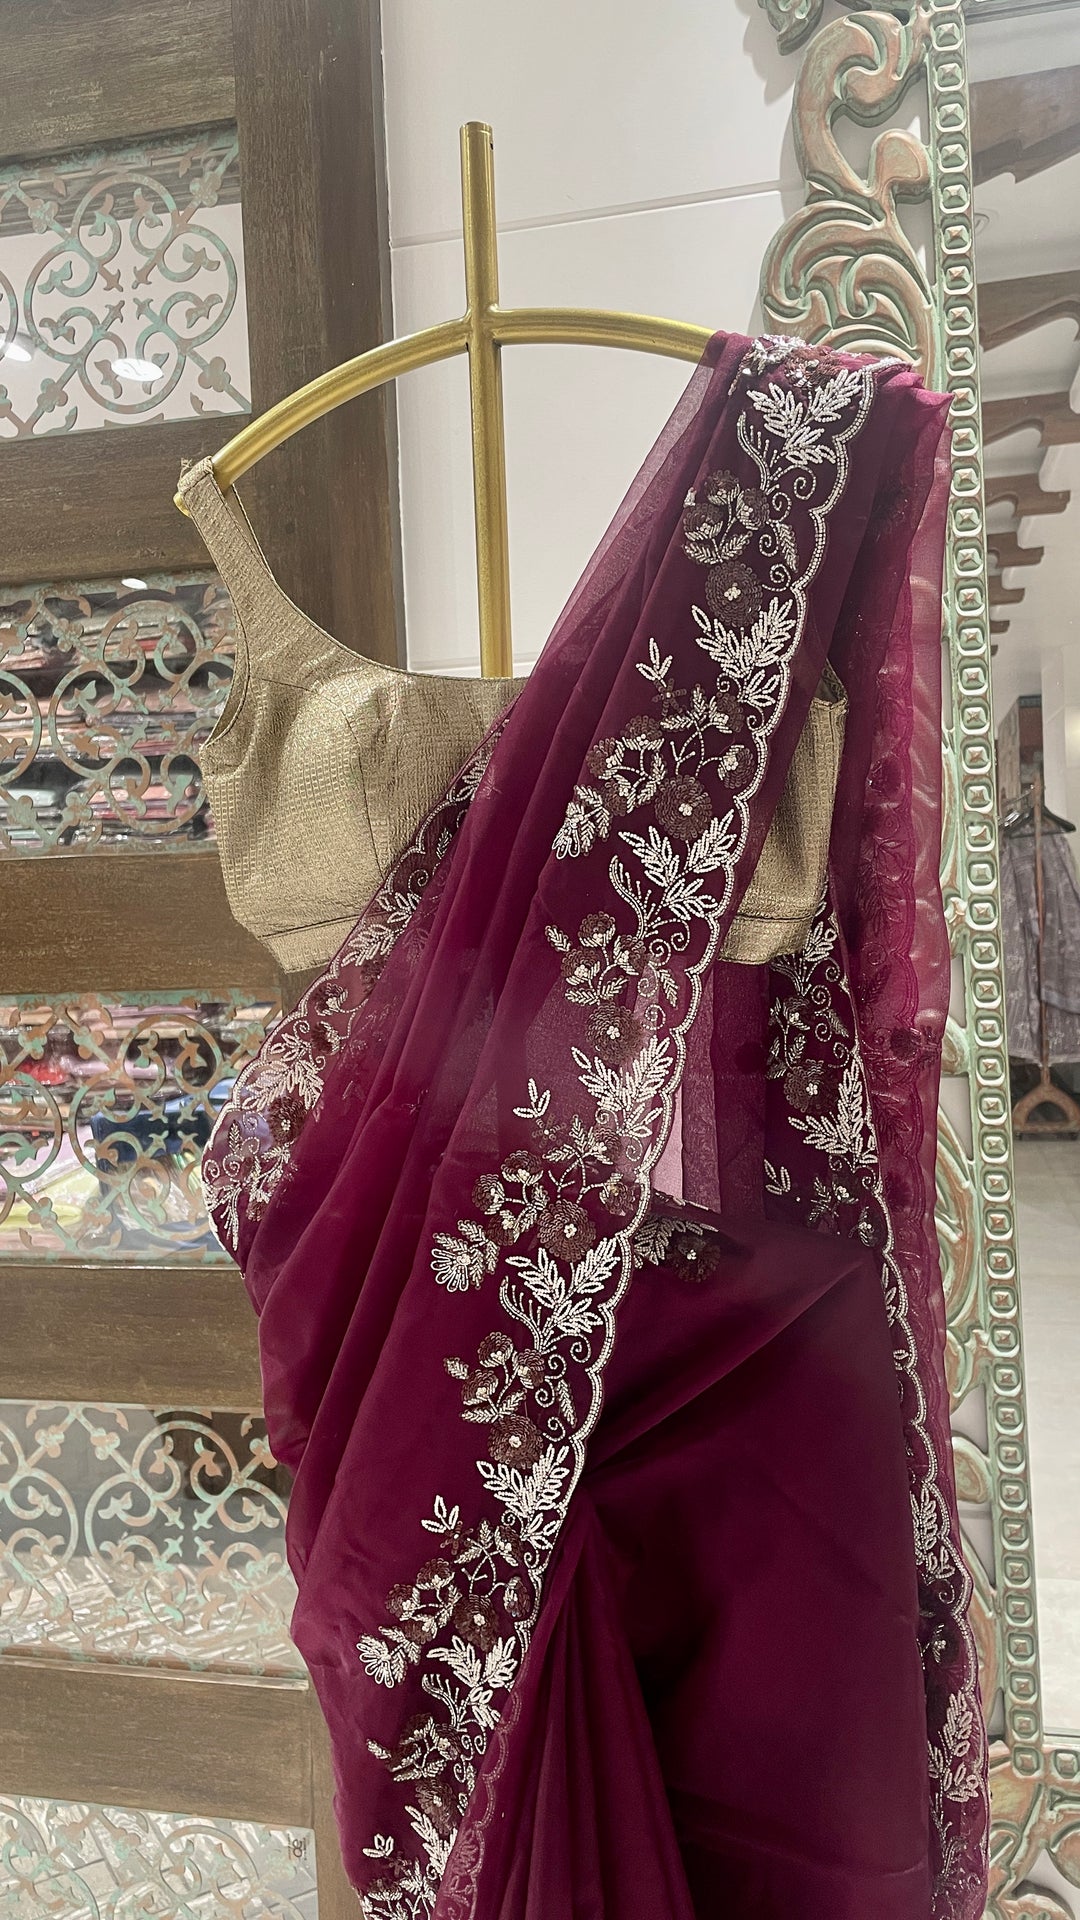 Violet organza saree with embellishments